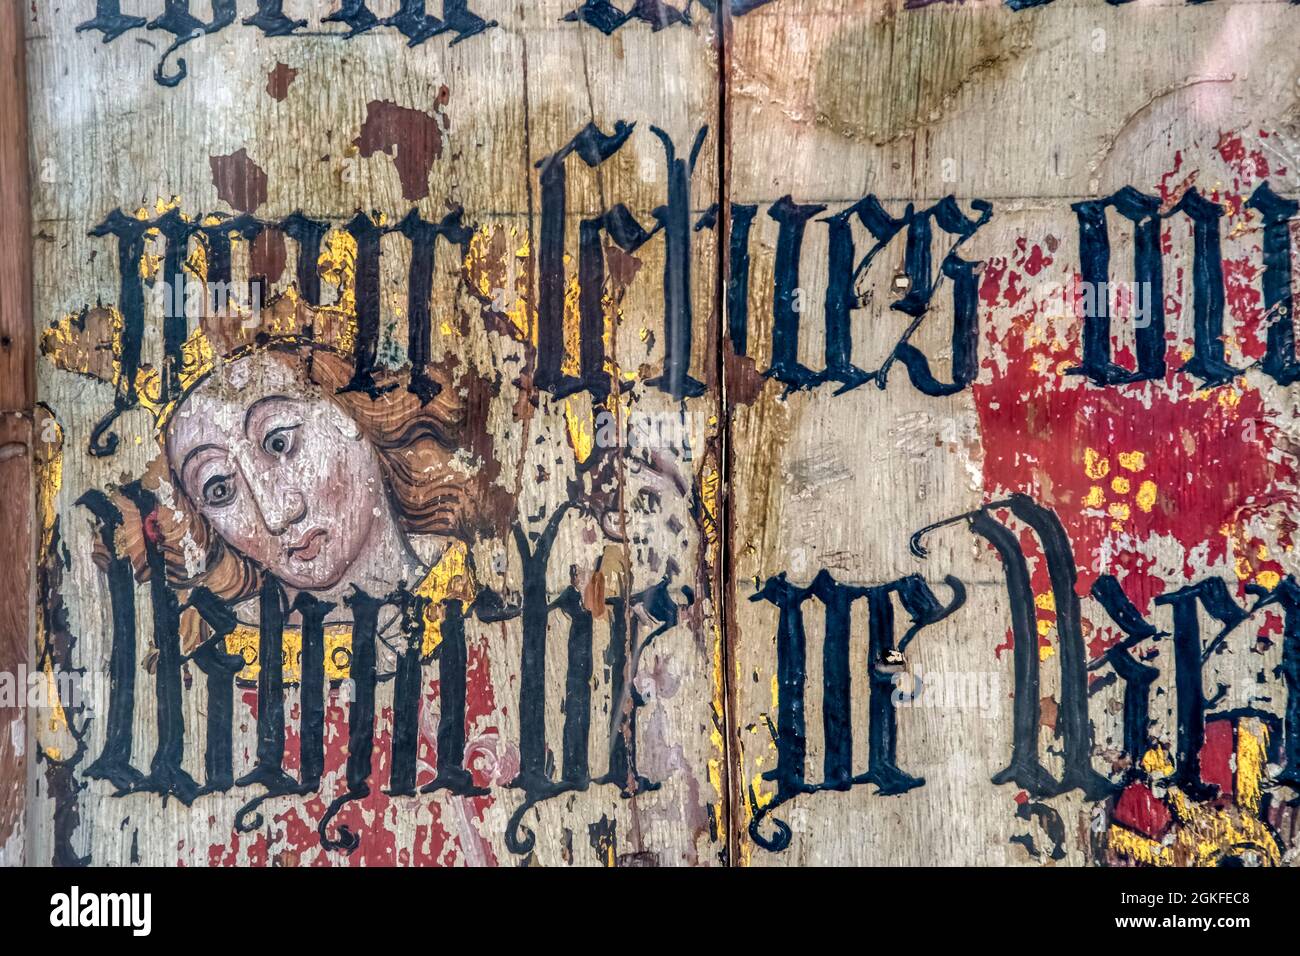 Binham Priory pantalla de rood. Pintura medieval de Santa Catalina mostrando a través de letra negra texto sobrepintado de la biblia de Cranmer de 1539. Foto de stock